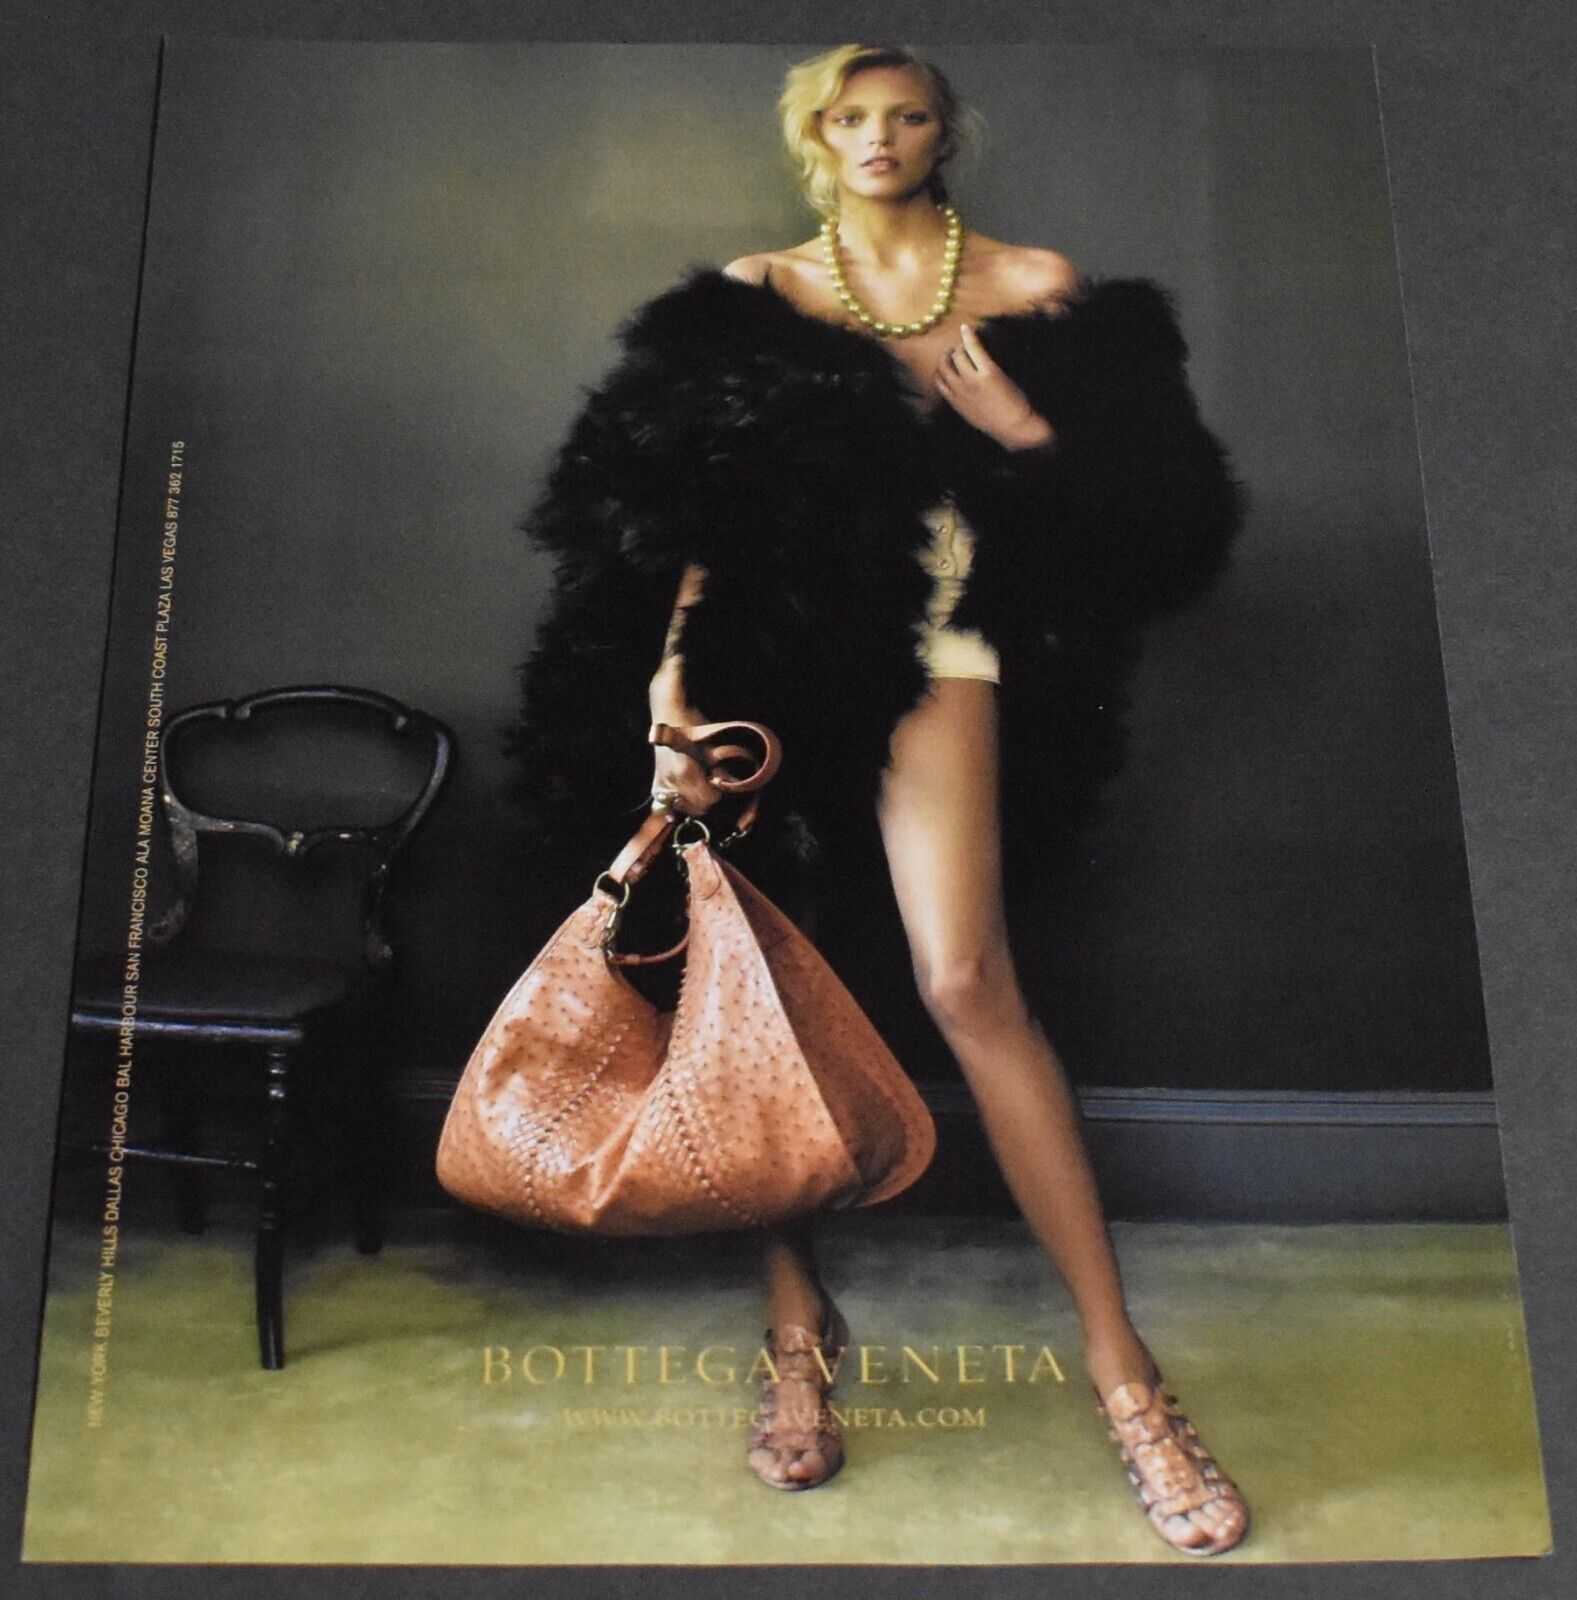 2007 Print Ad Heels Fashion Style Lady Long Legs Blonde Sexy Bottega Veneta Hair